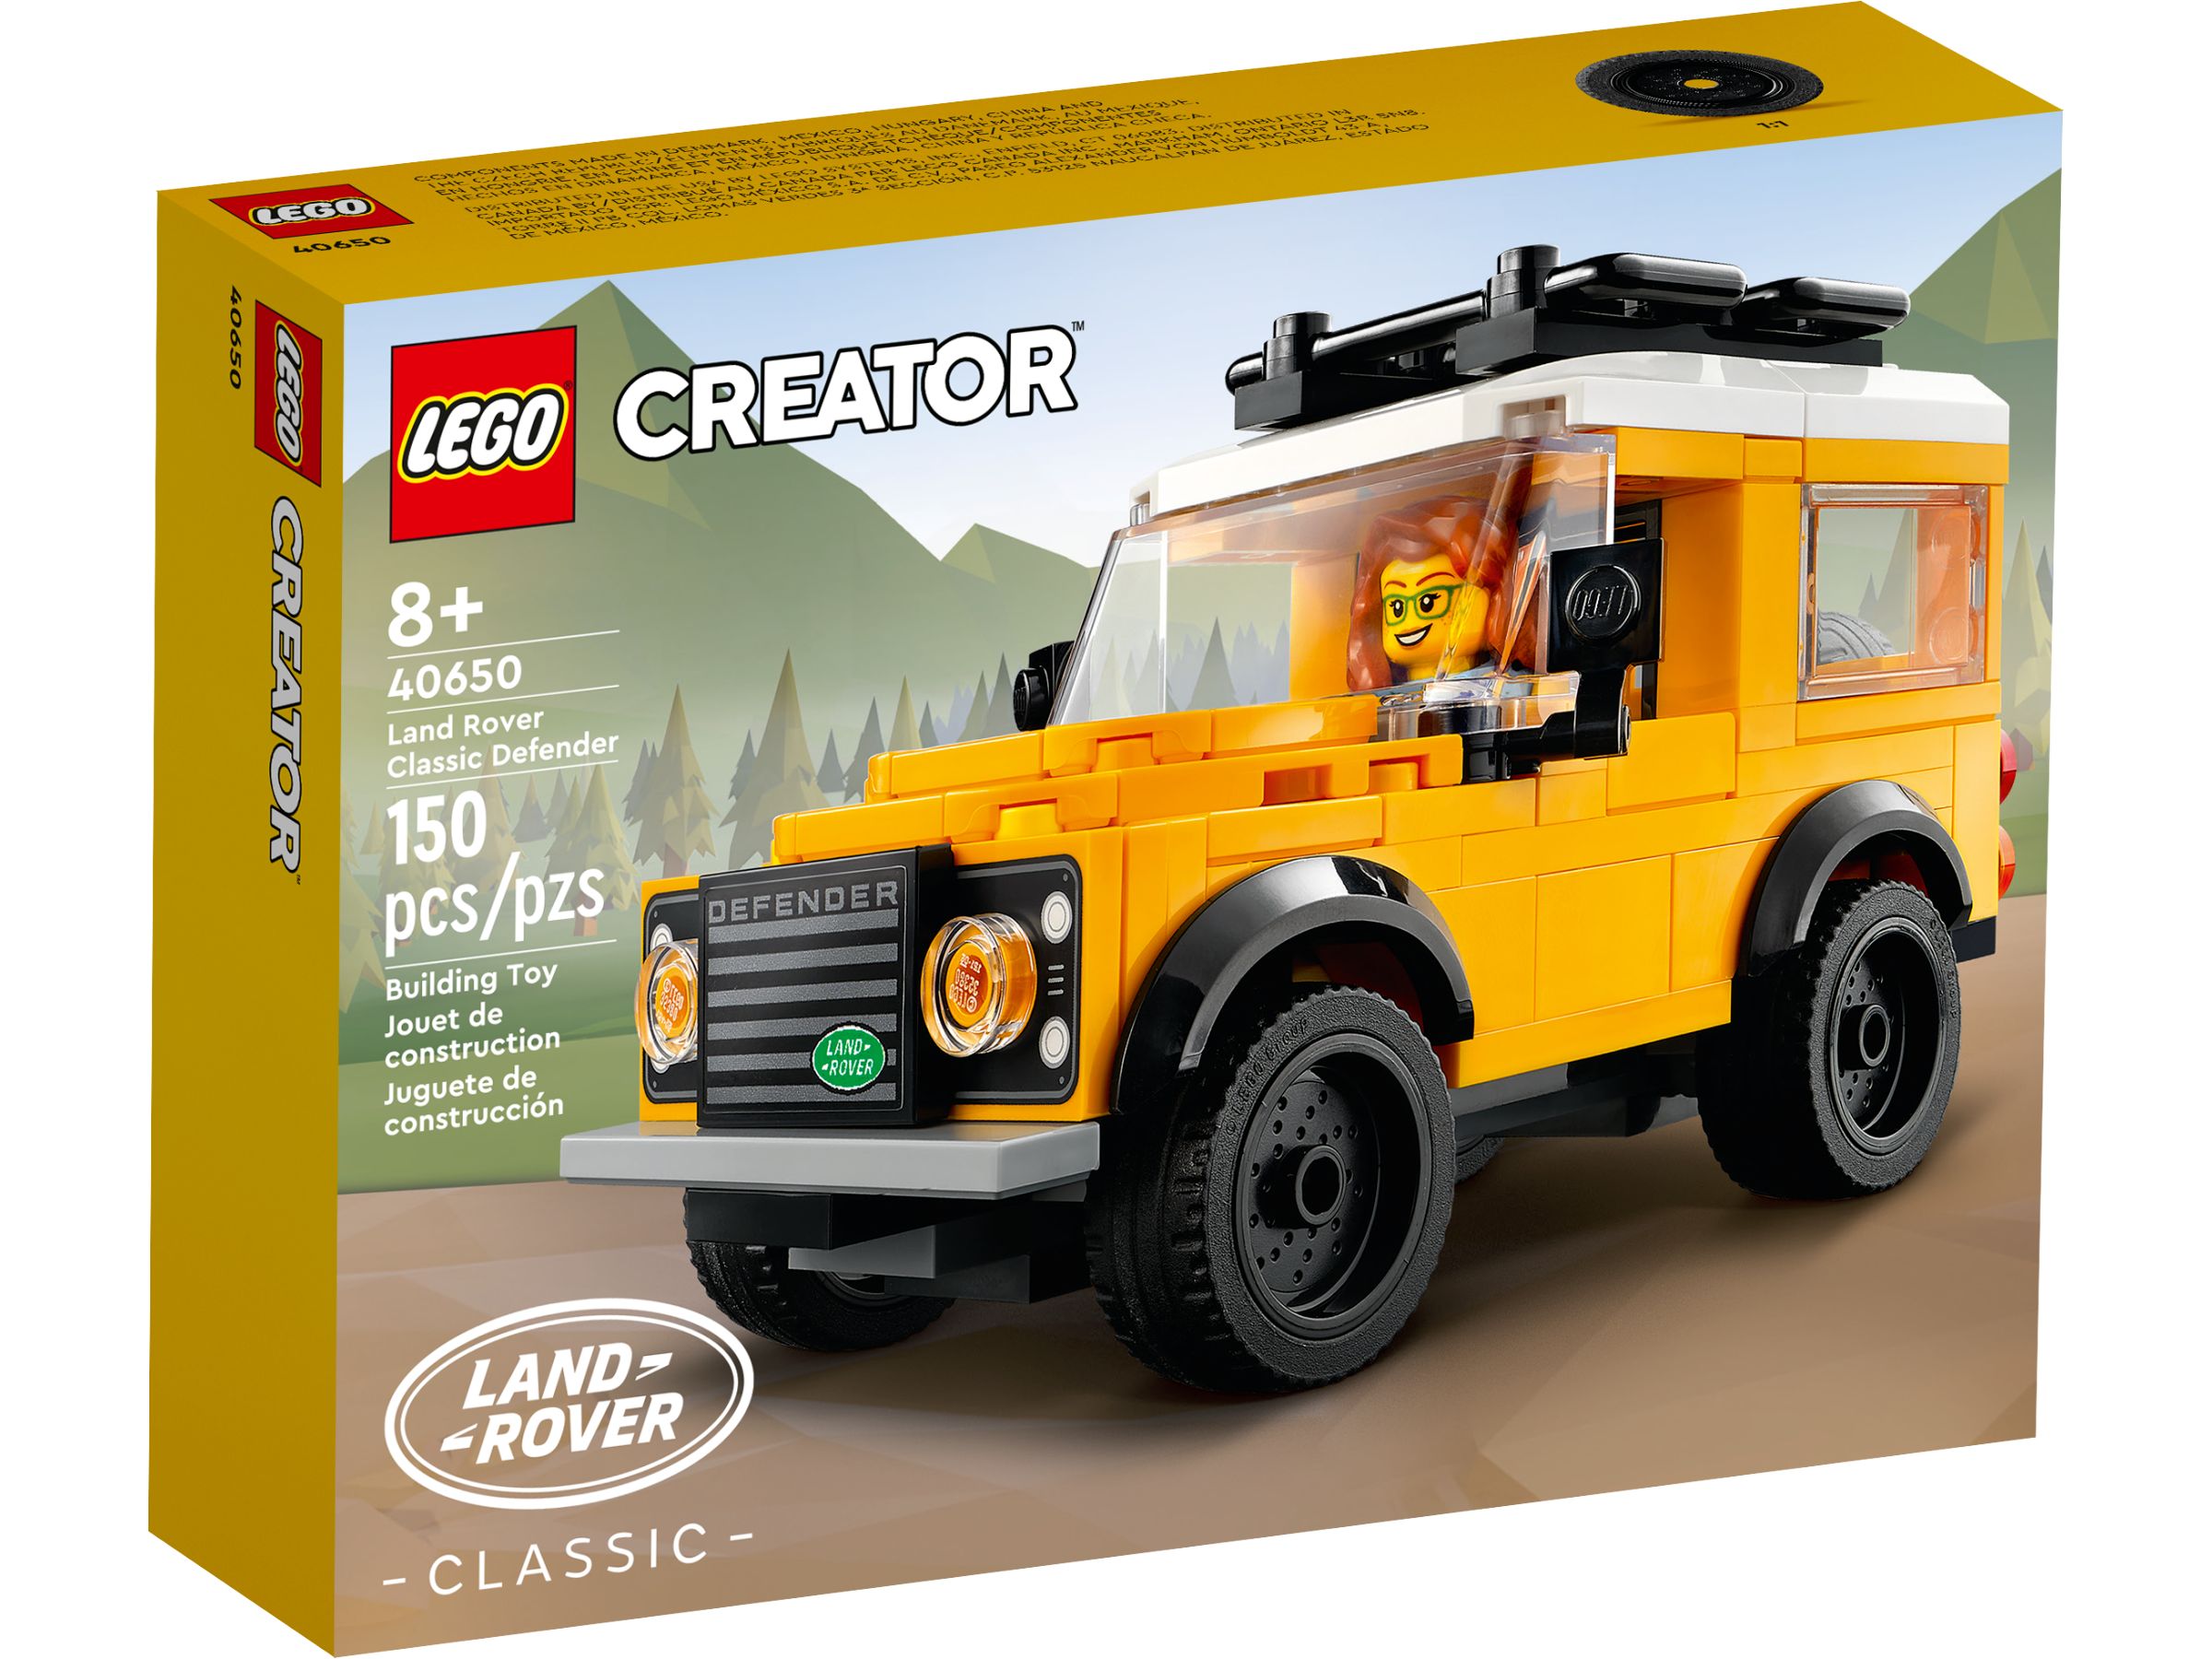 LEGO Creator 40650 Klassischer Land Rover Defender LEGO_40650_alt1.jpg